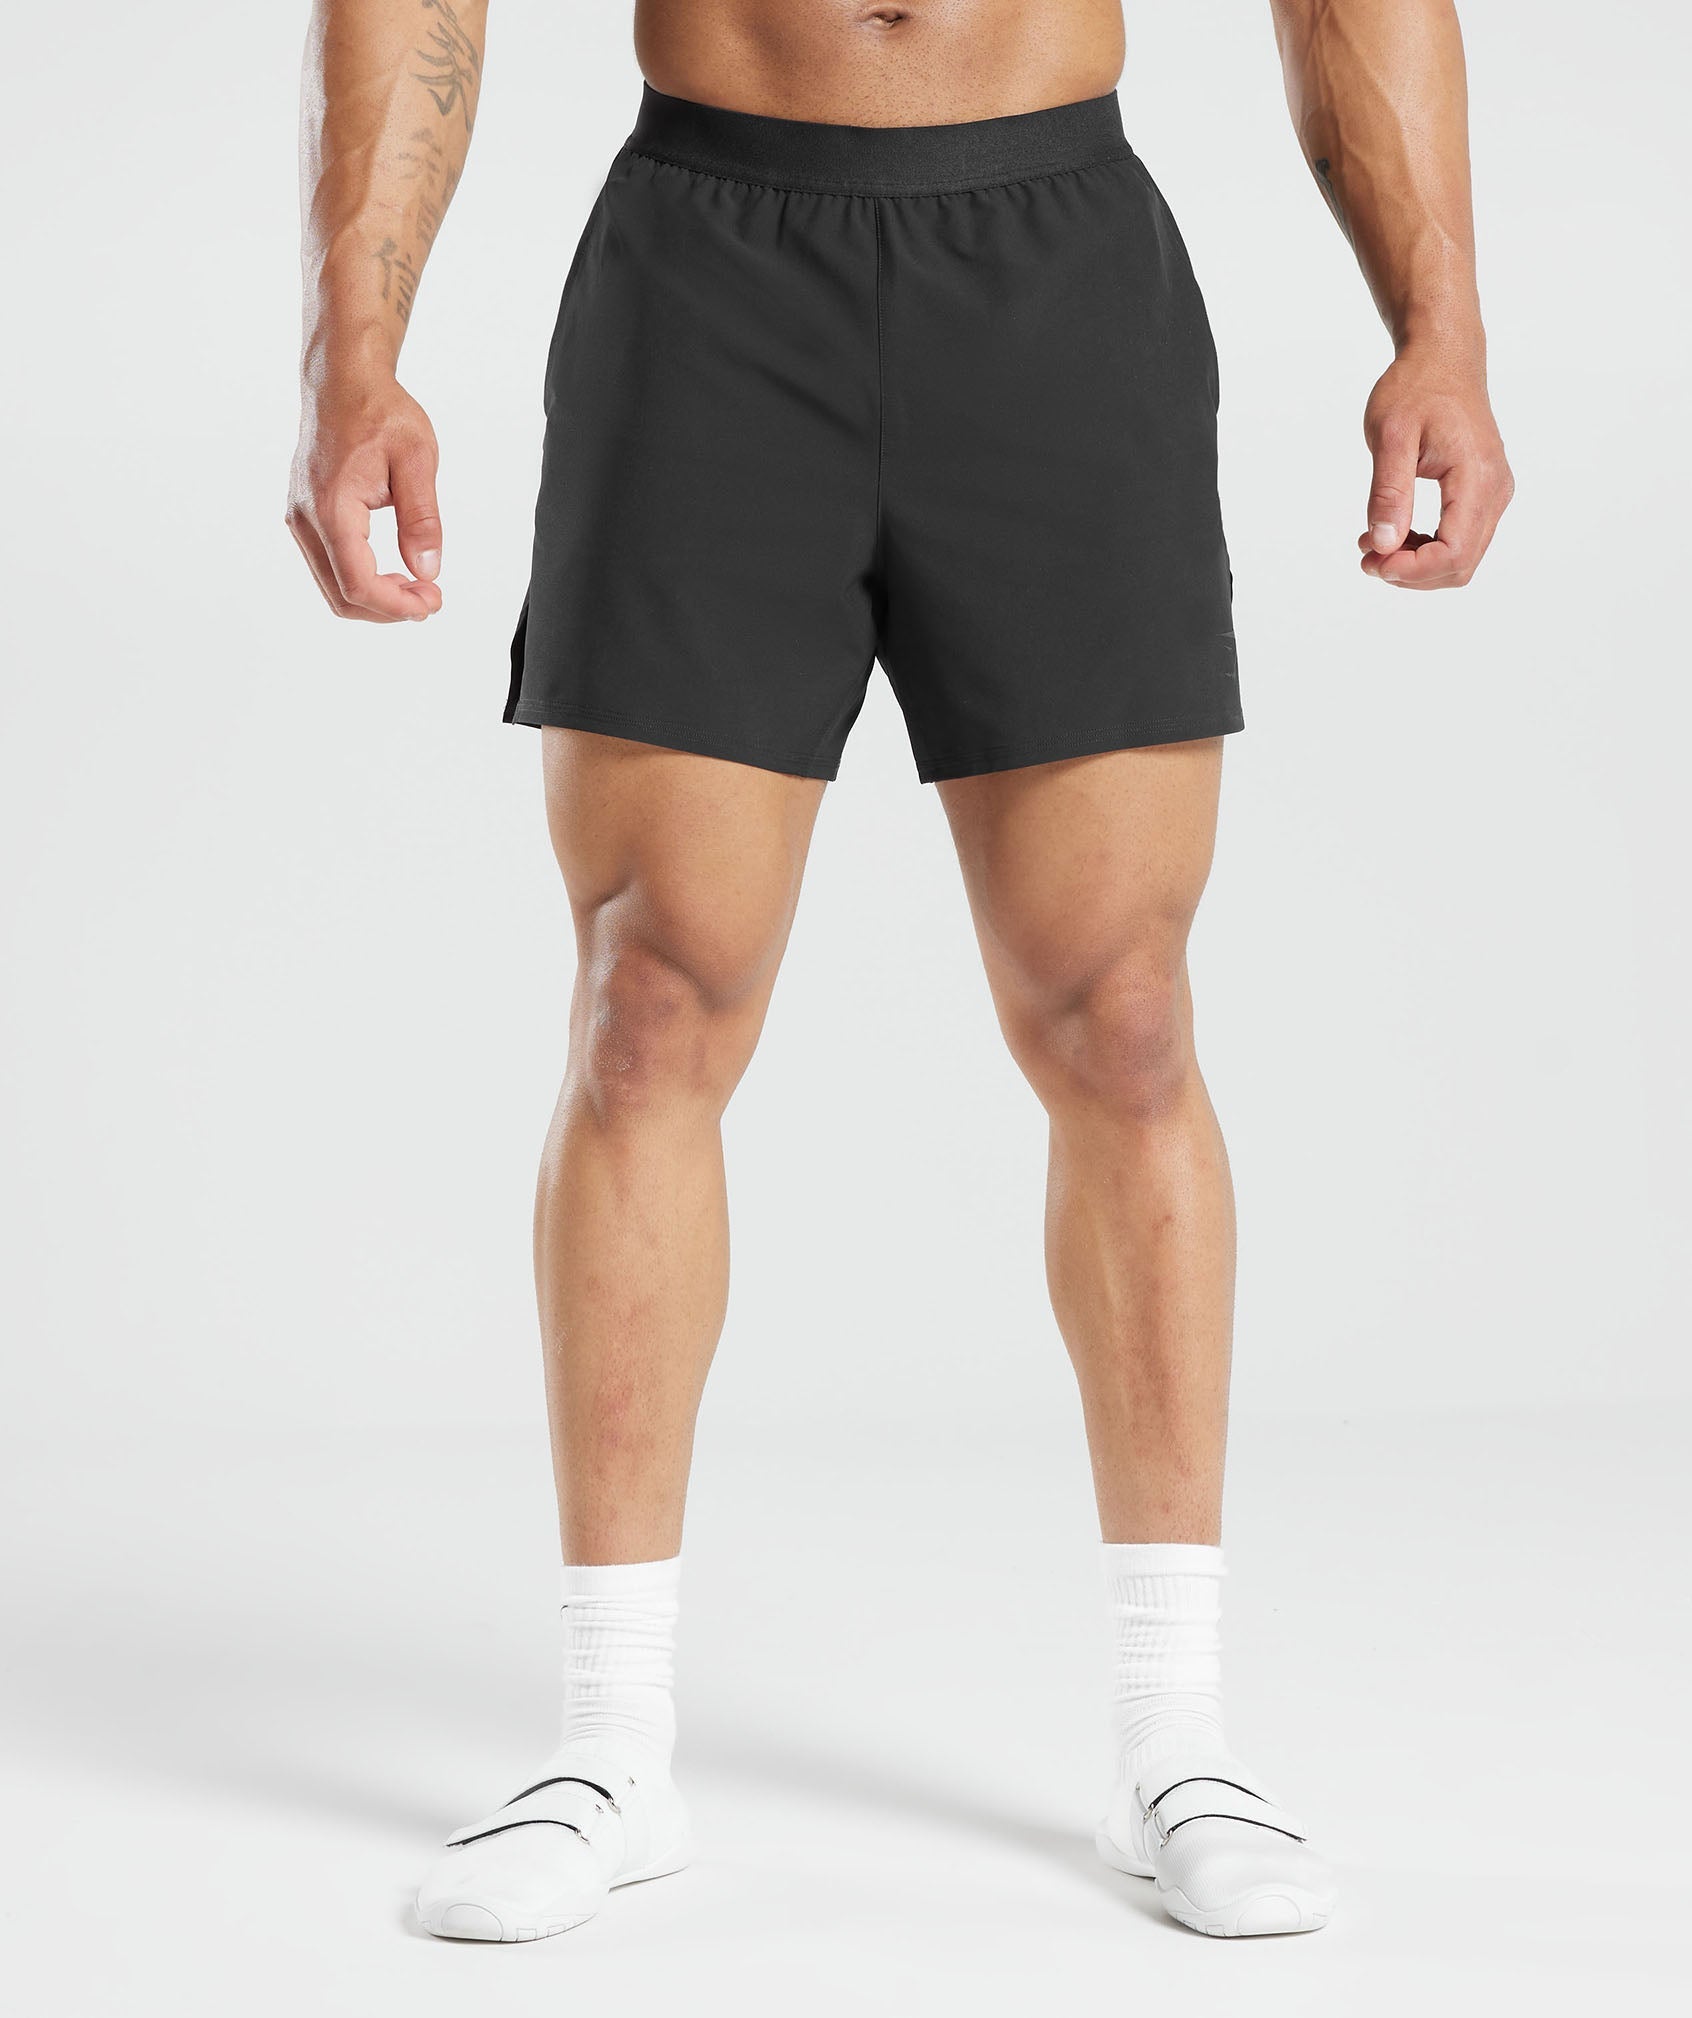 Gymshark 315 Woven Shorts - Black